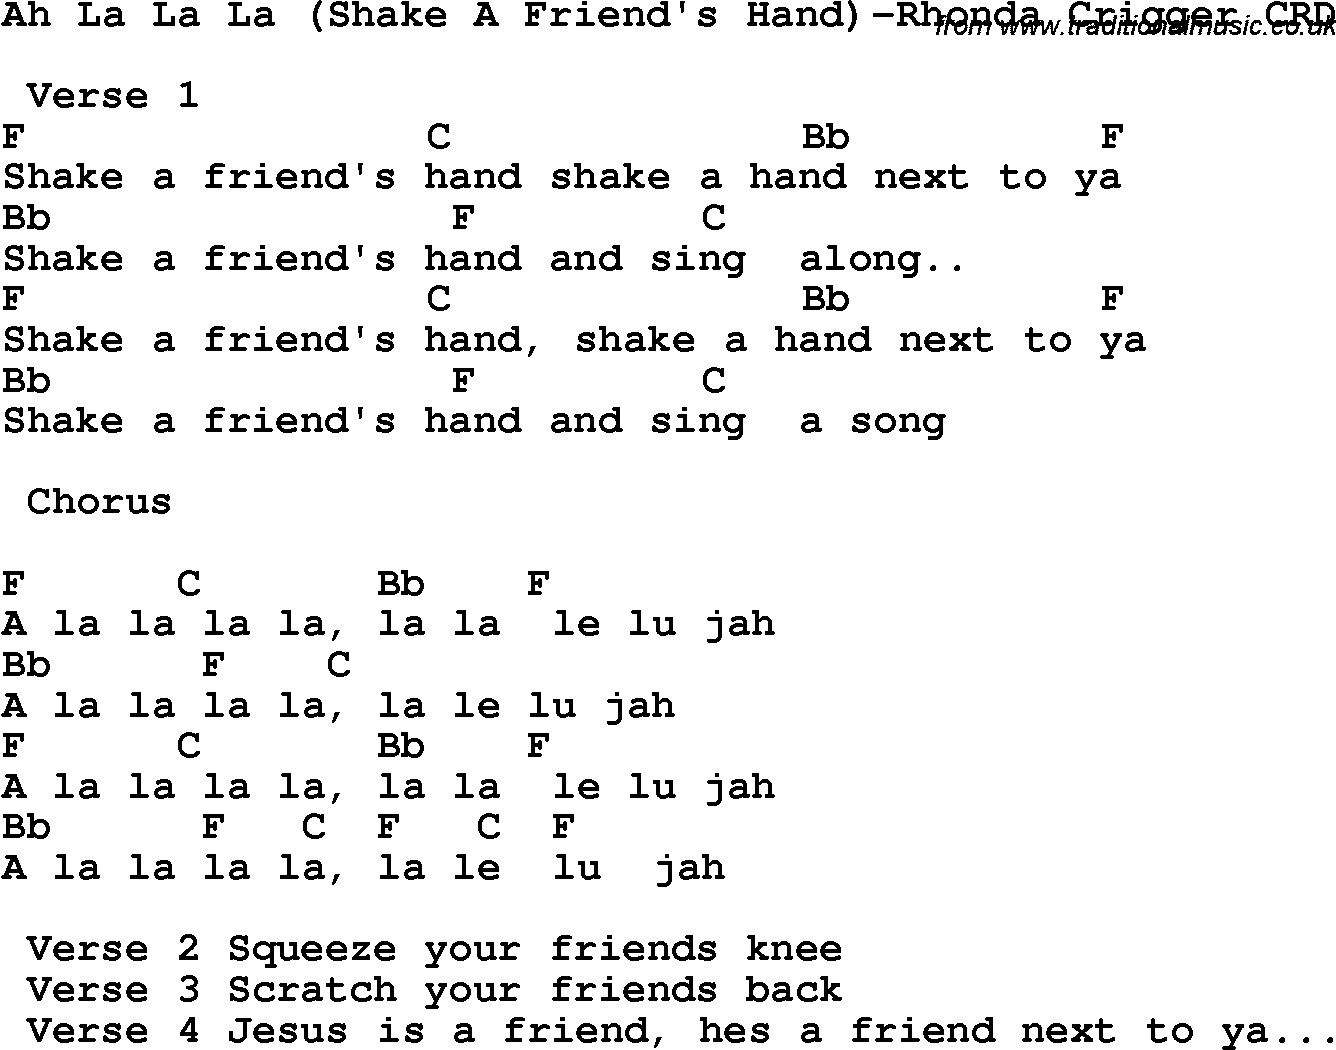 Christian Chlidrens Song Ah La La La Shake A Friend's Hand-Rhonda Crigger CRD Lyrics & Chords